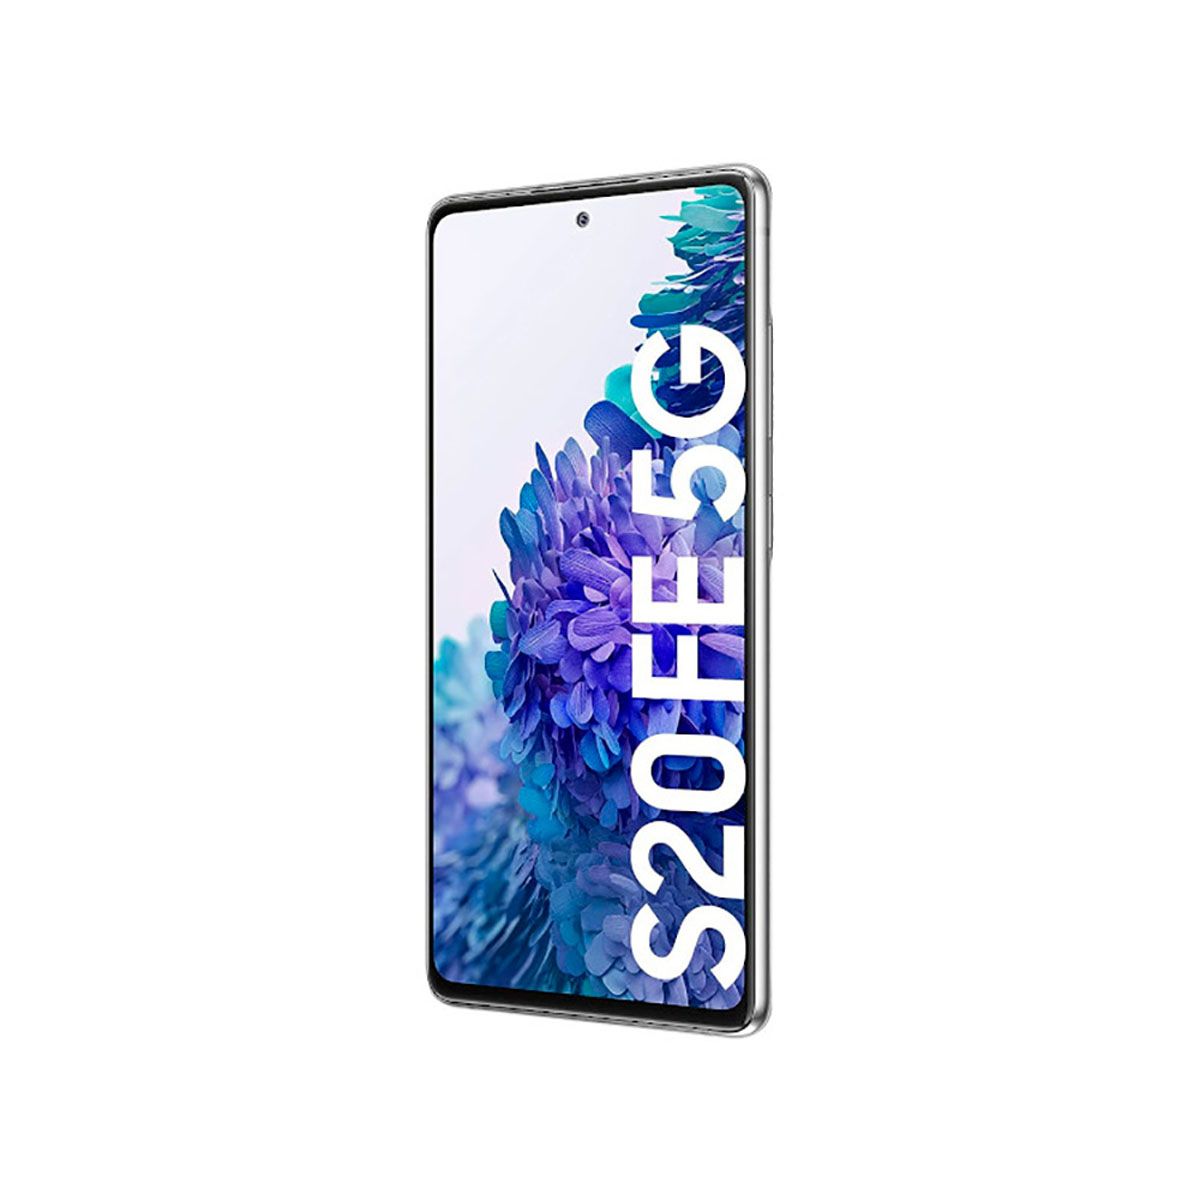 Samsung Galaxy S20 FE 5G 6GB/128GB White (Cloud White) Dual SIM G781